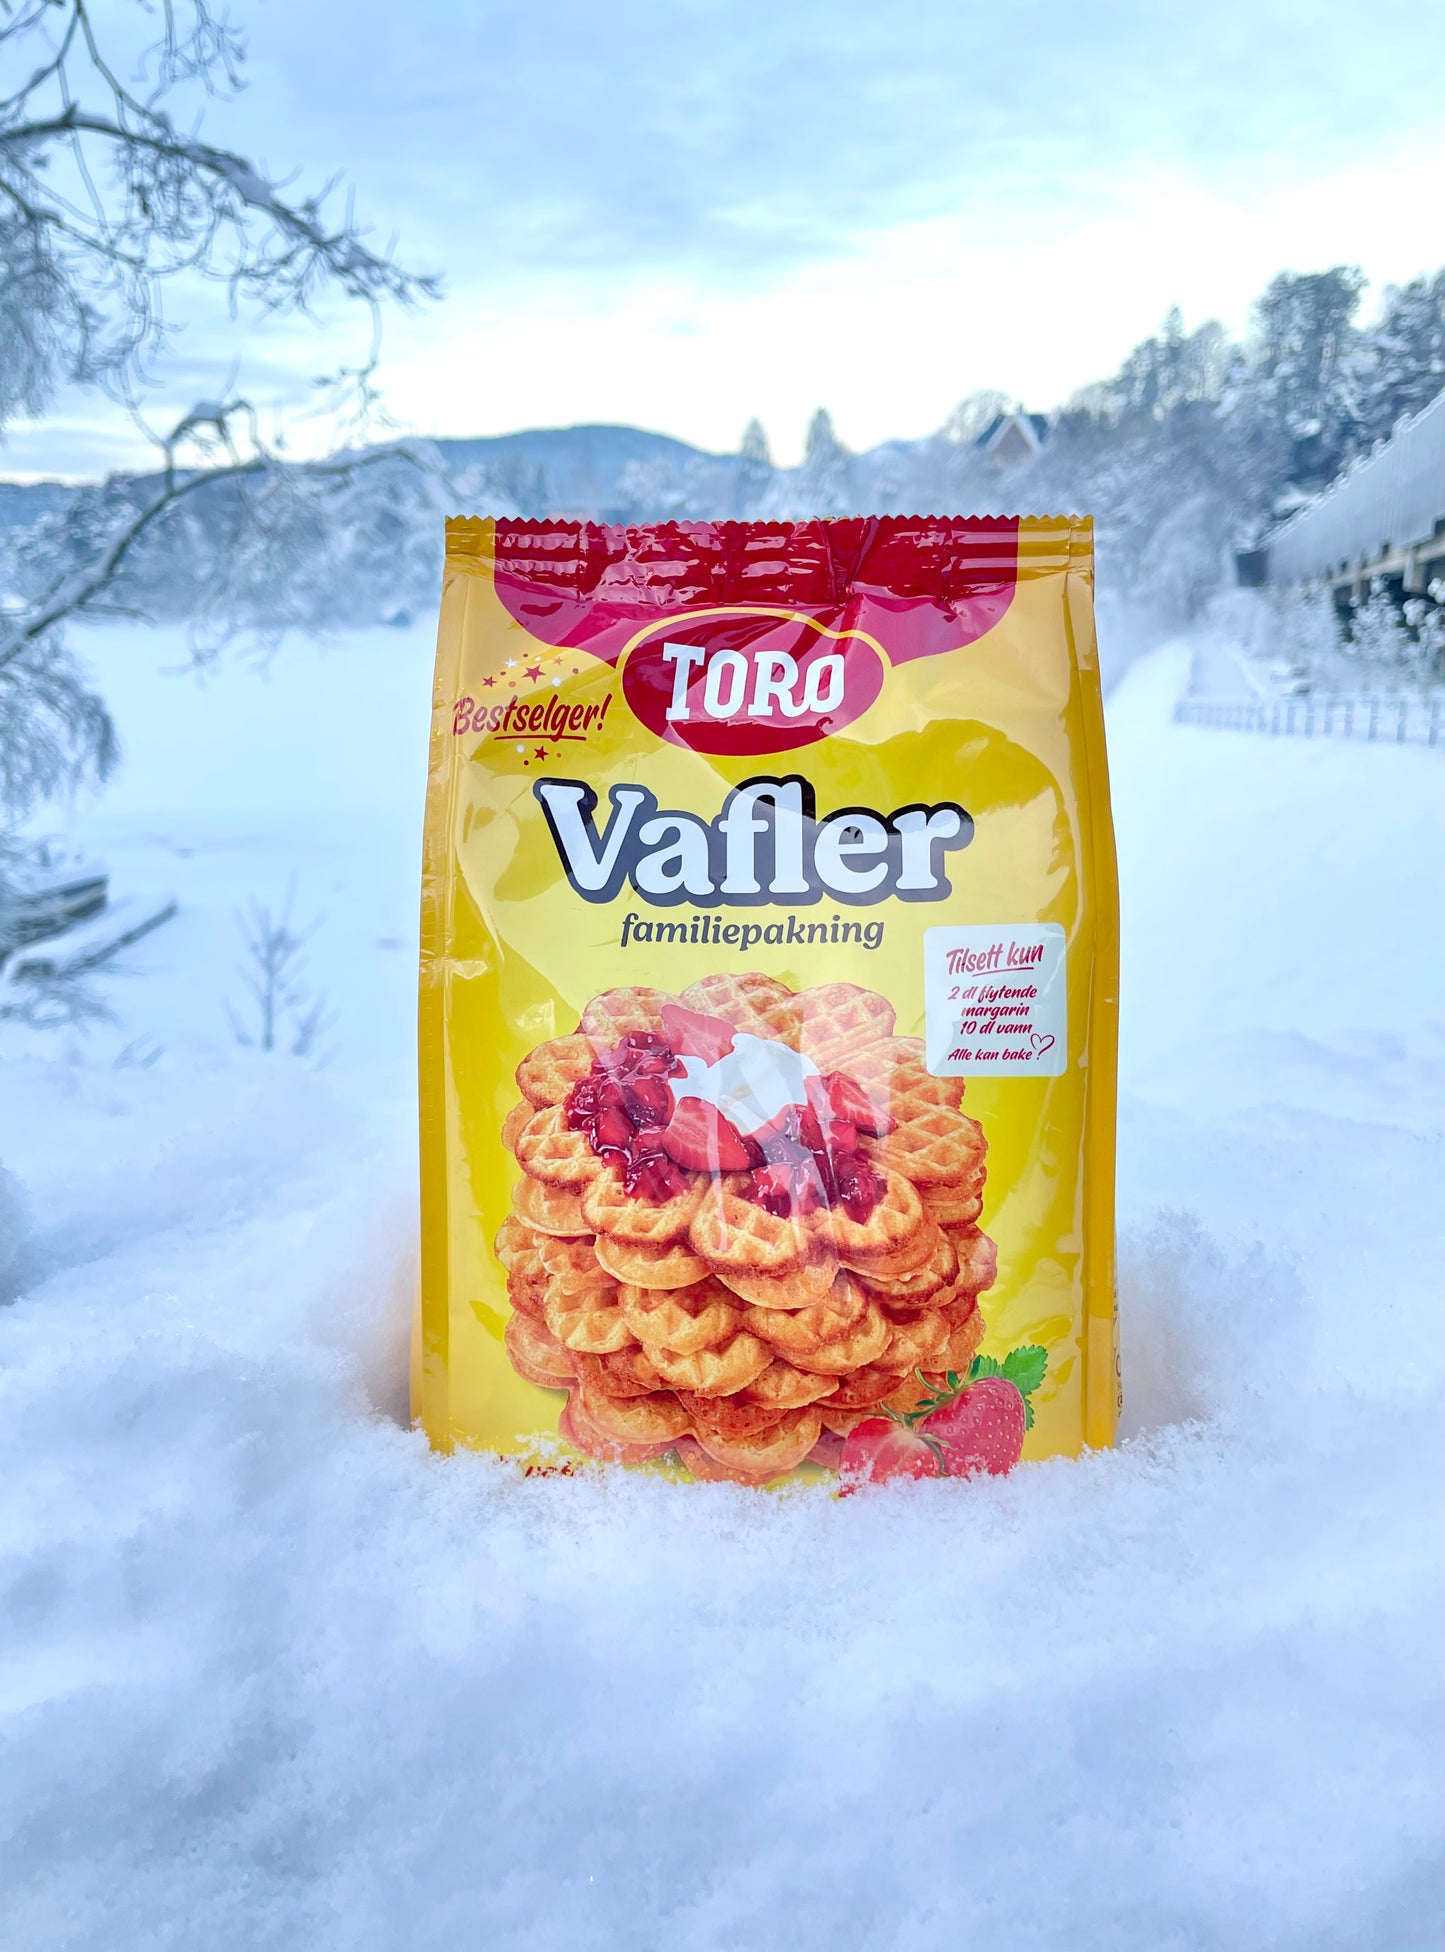 Toro Vafler Mix - Norwegian Waffles Mix 591 Grams (20 oz)